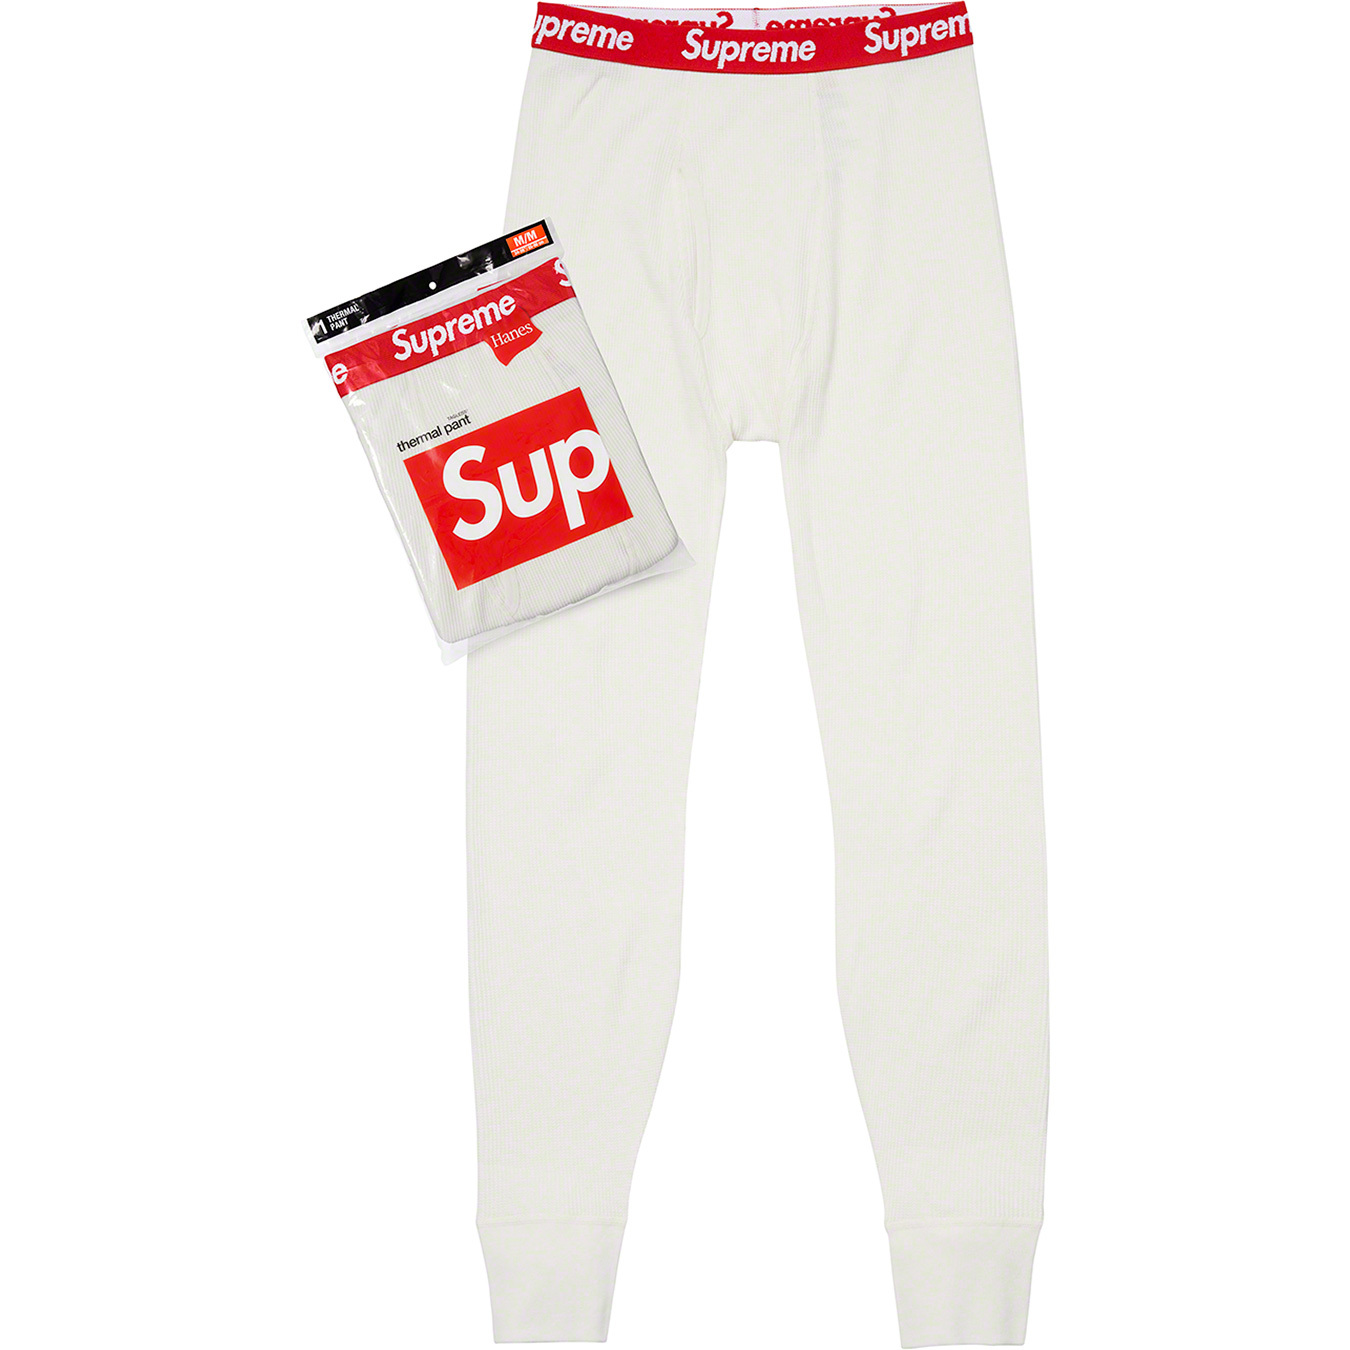 Supreme®/Hanes® Thermal Pant (1 Pack) | Supreme 20fw